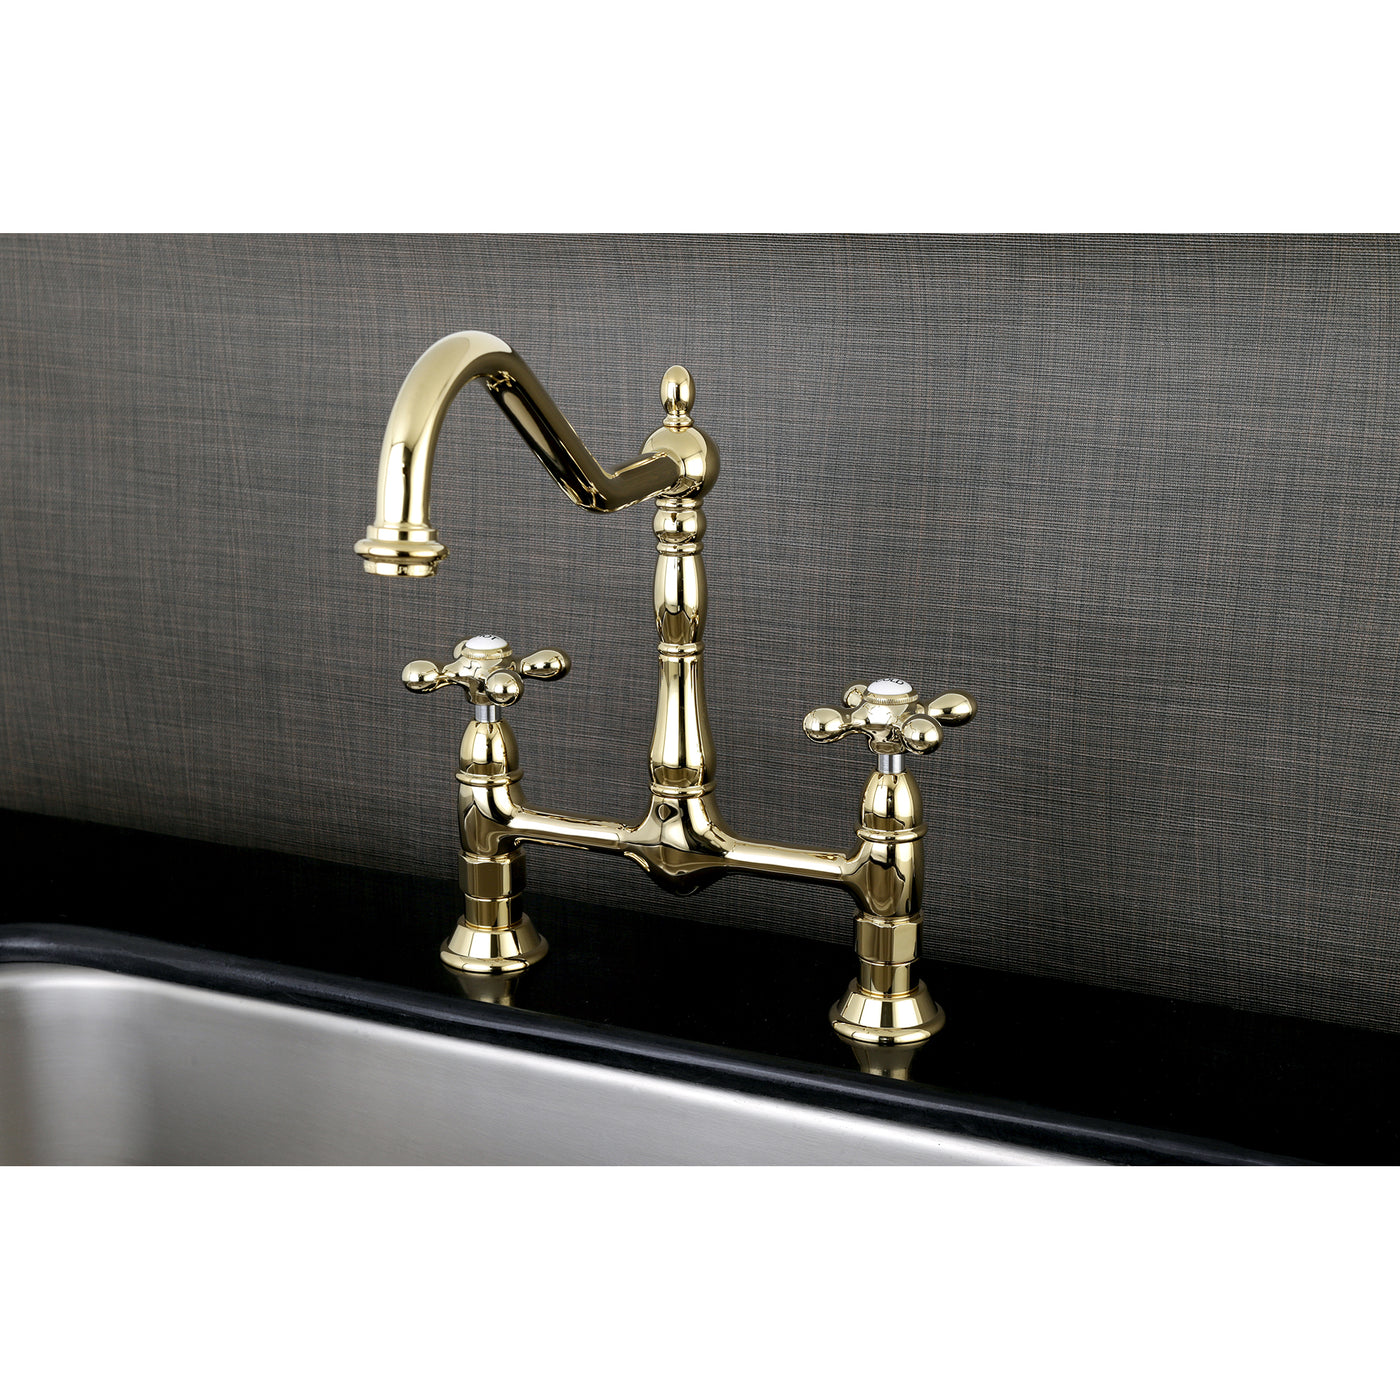 Elements of Design ES1172AX Bridge Kitchen Faucet, Polished Brass